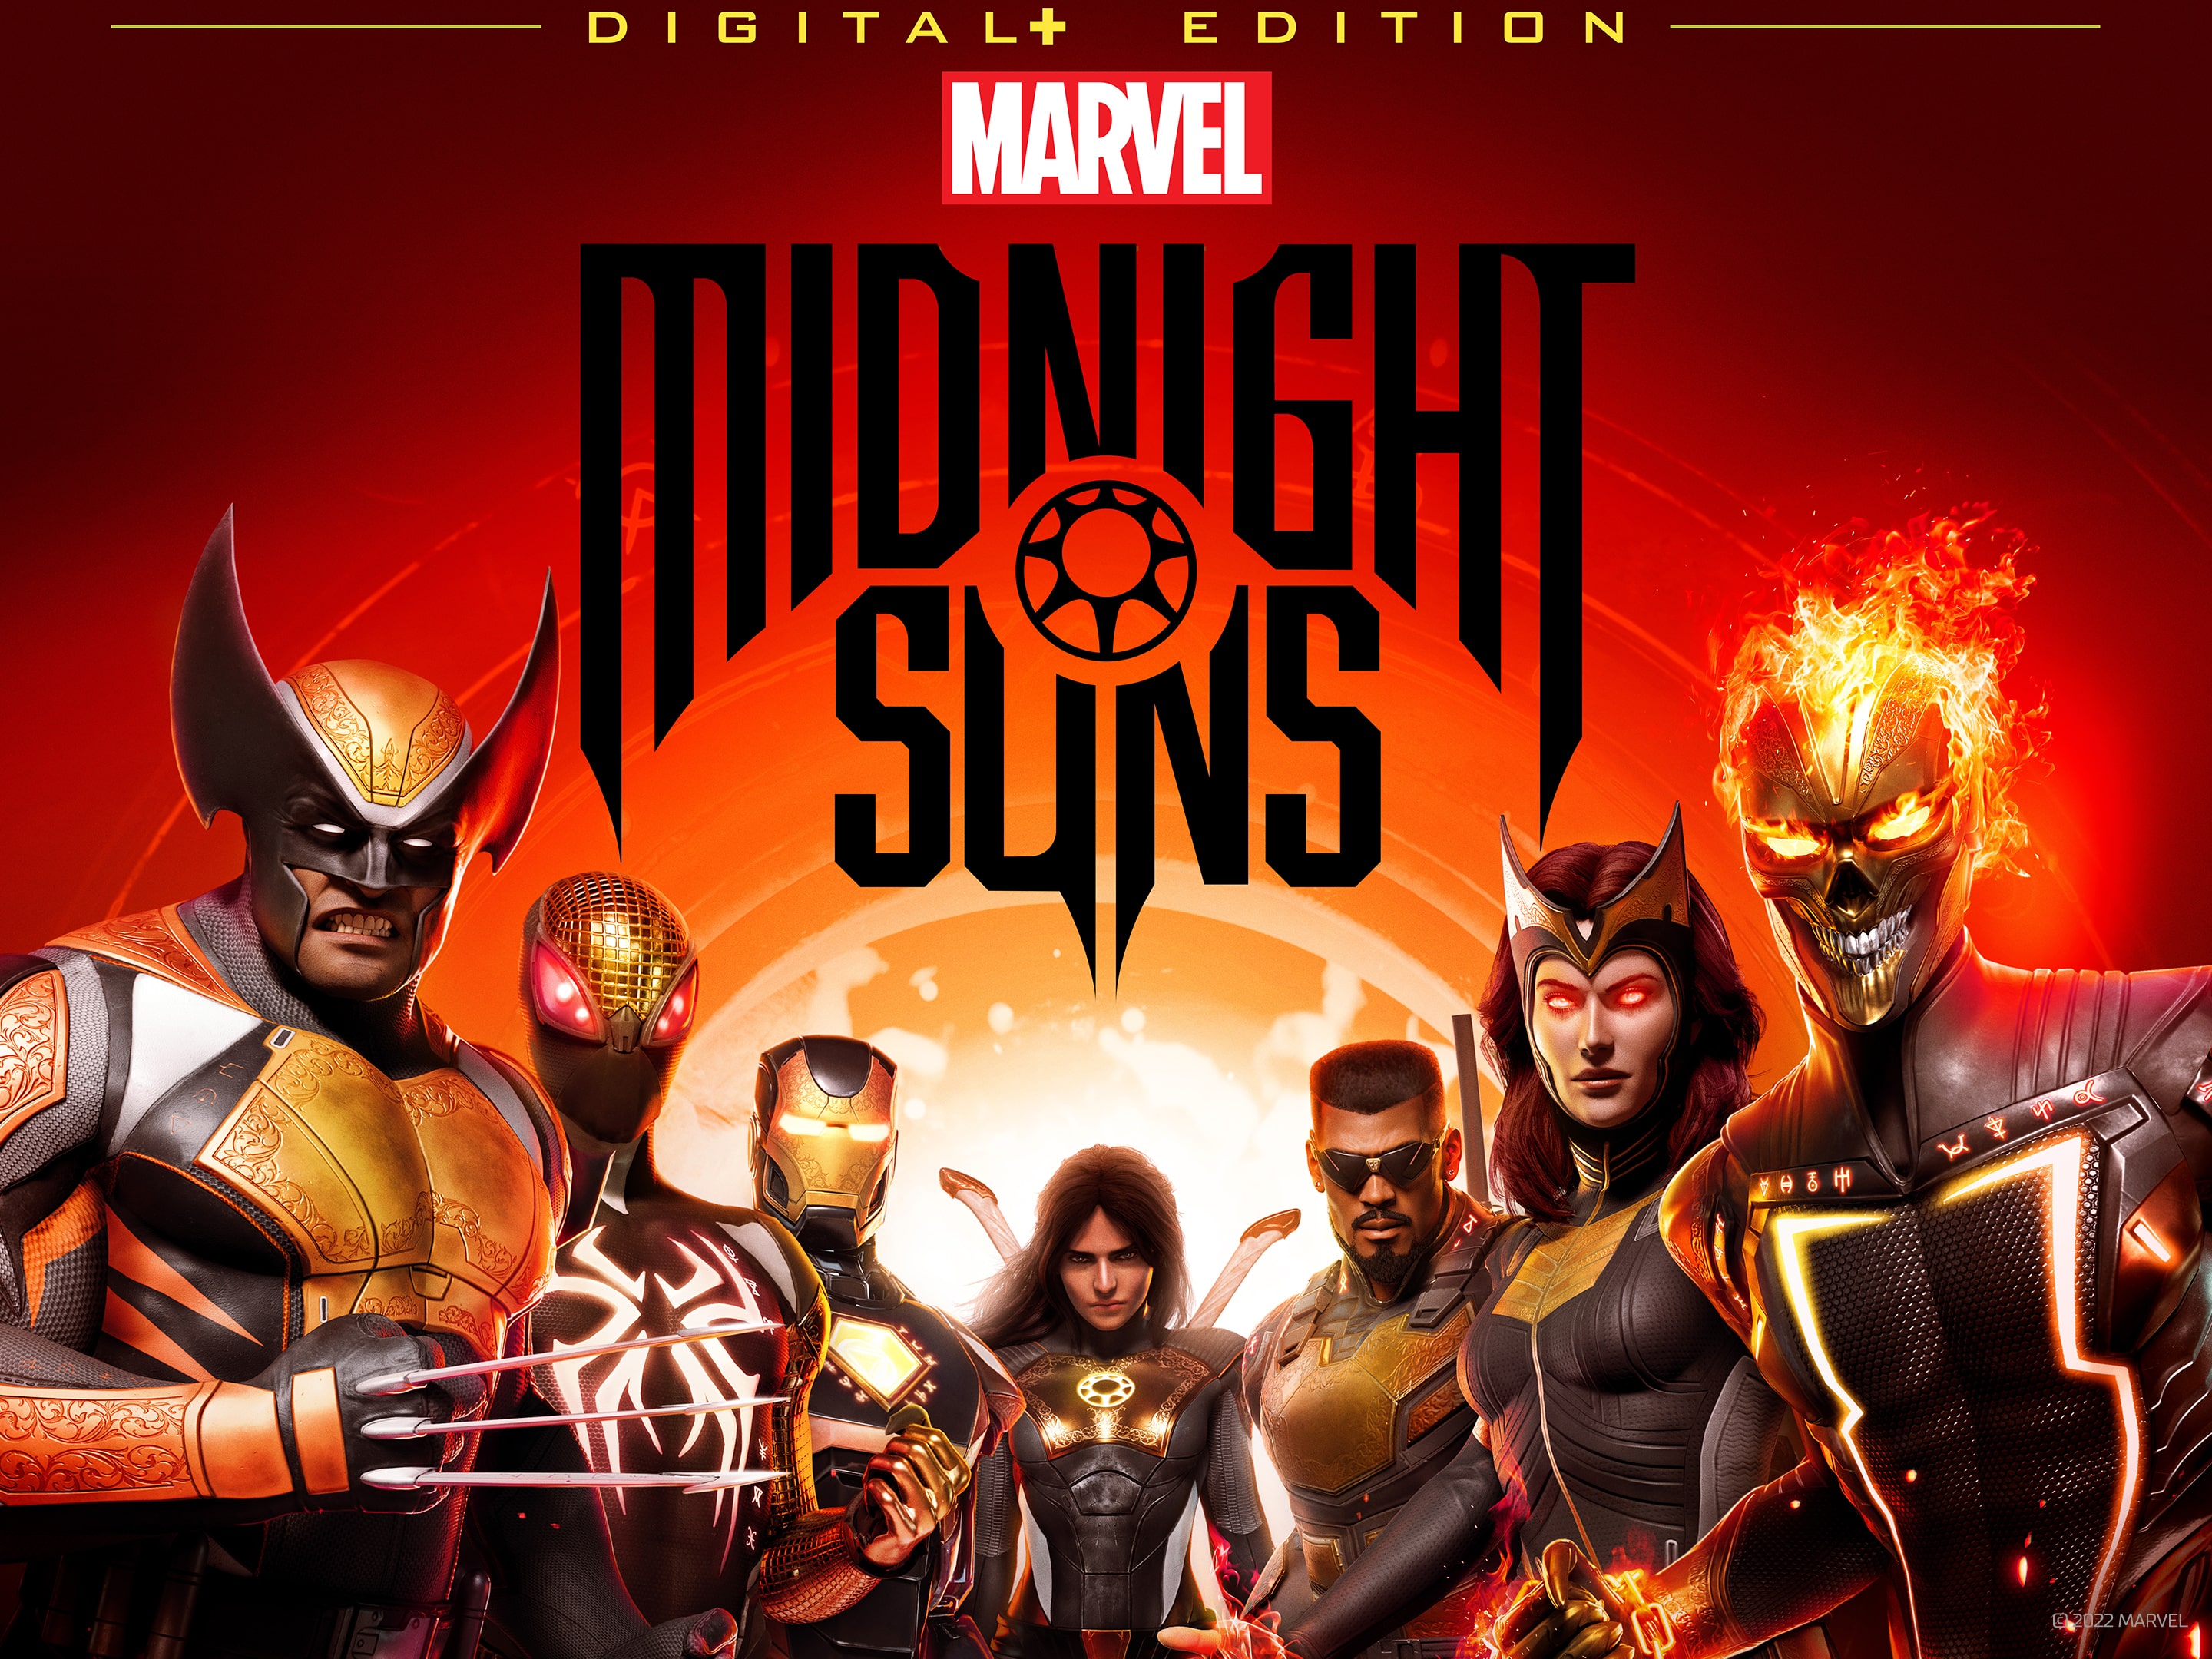 Buy Marvel's Midnight Suns Enhanced Edition